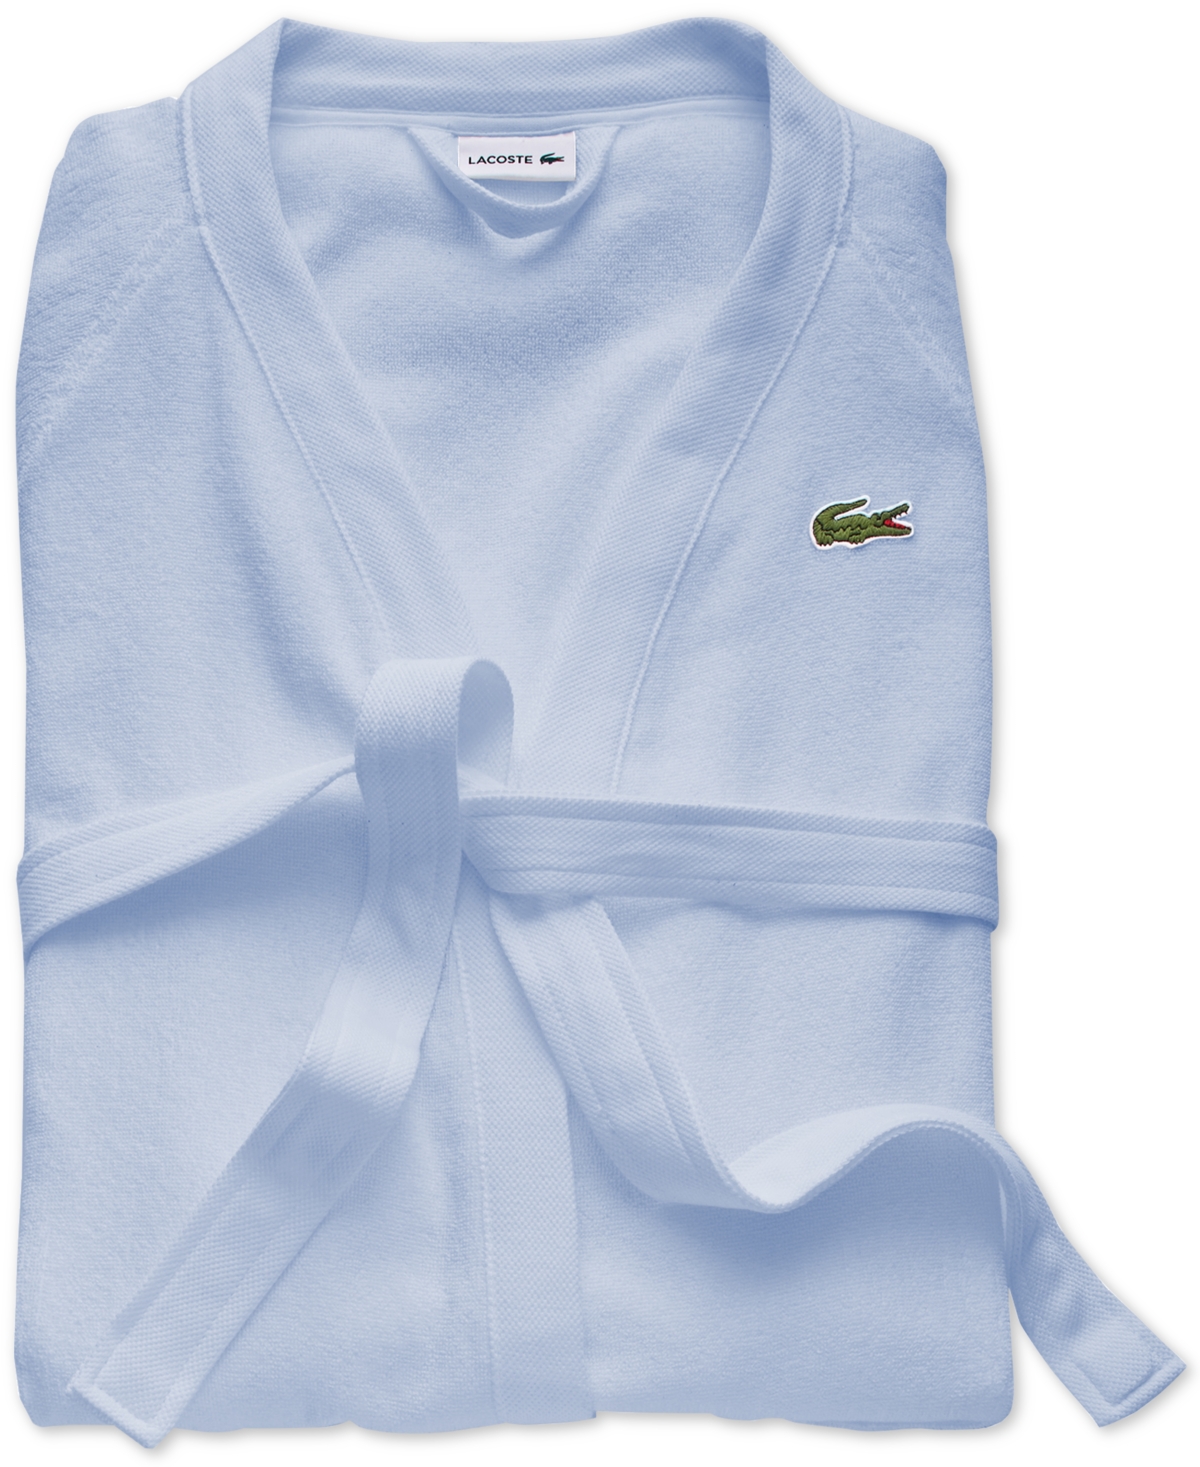 Lacoste Home Logo Patch 100% Cotton Pique Bath Robe In Sky